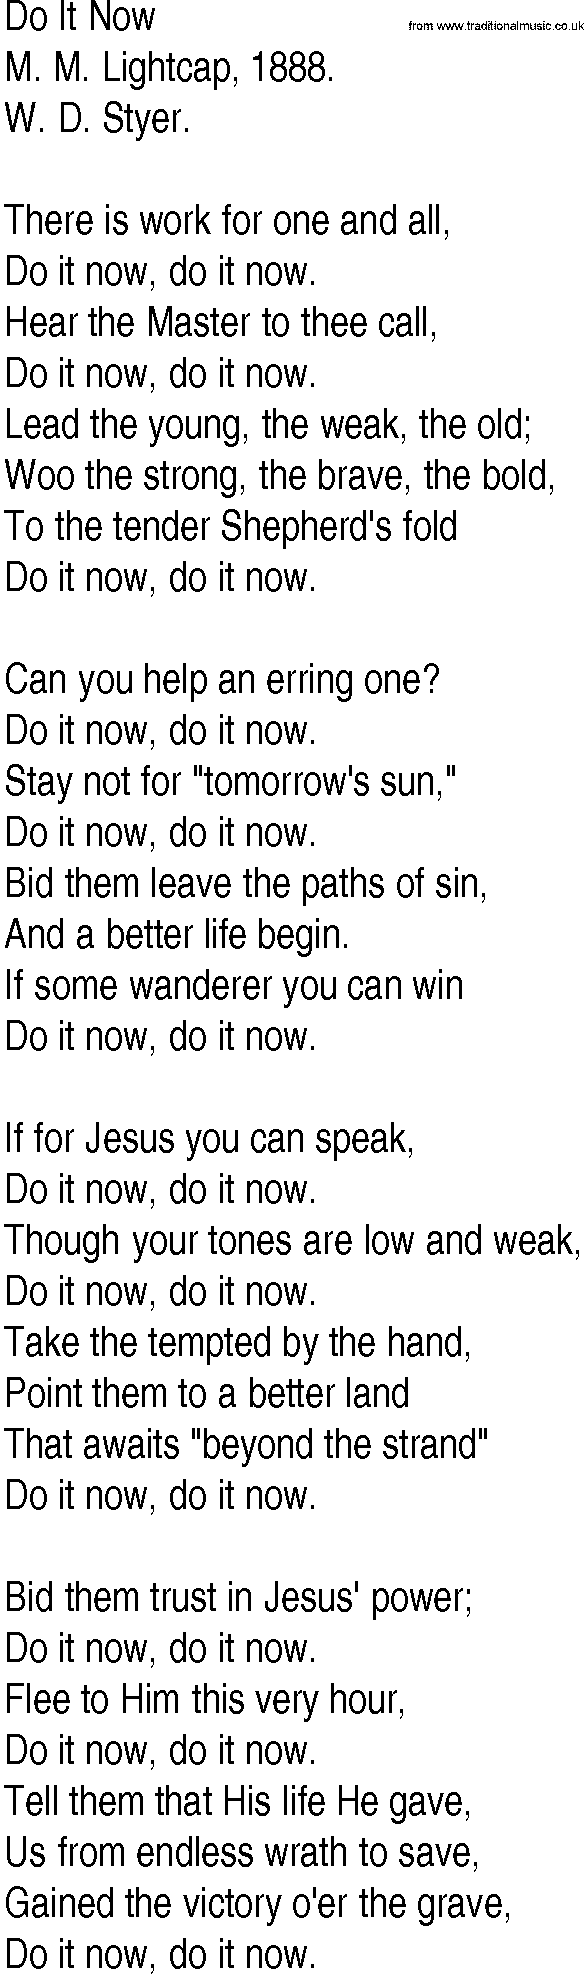 Hymn and Gospel Song: Do It Now by M M Lightcap lyrics